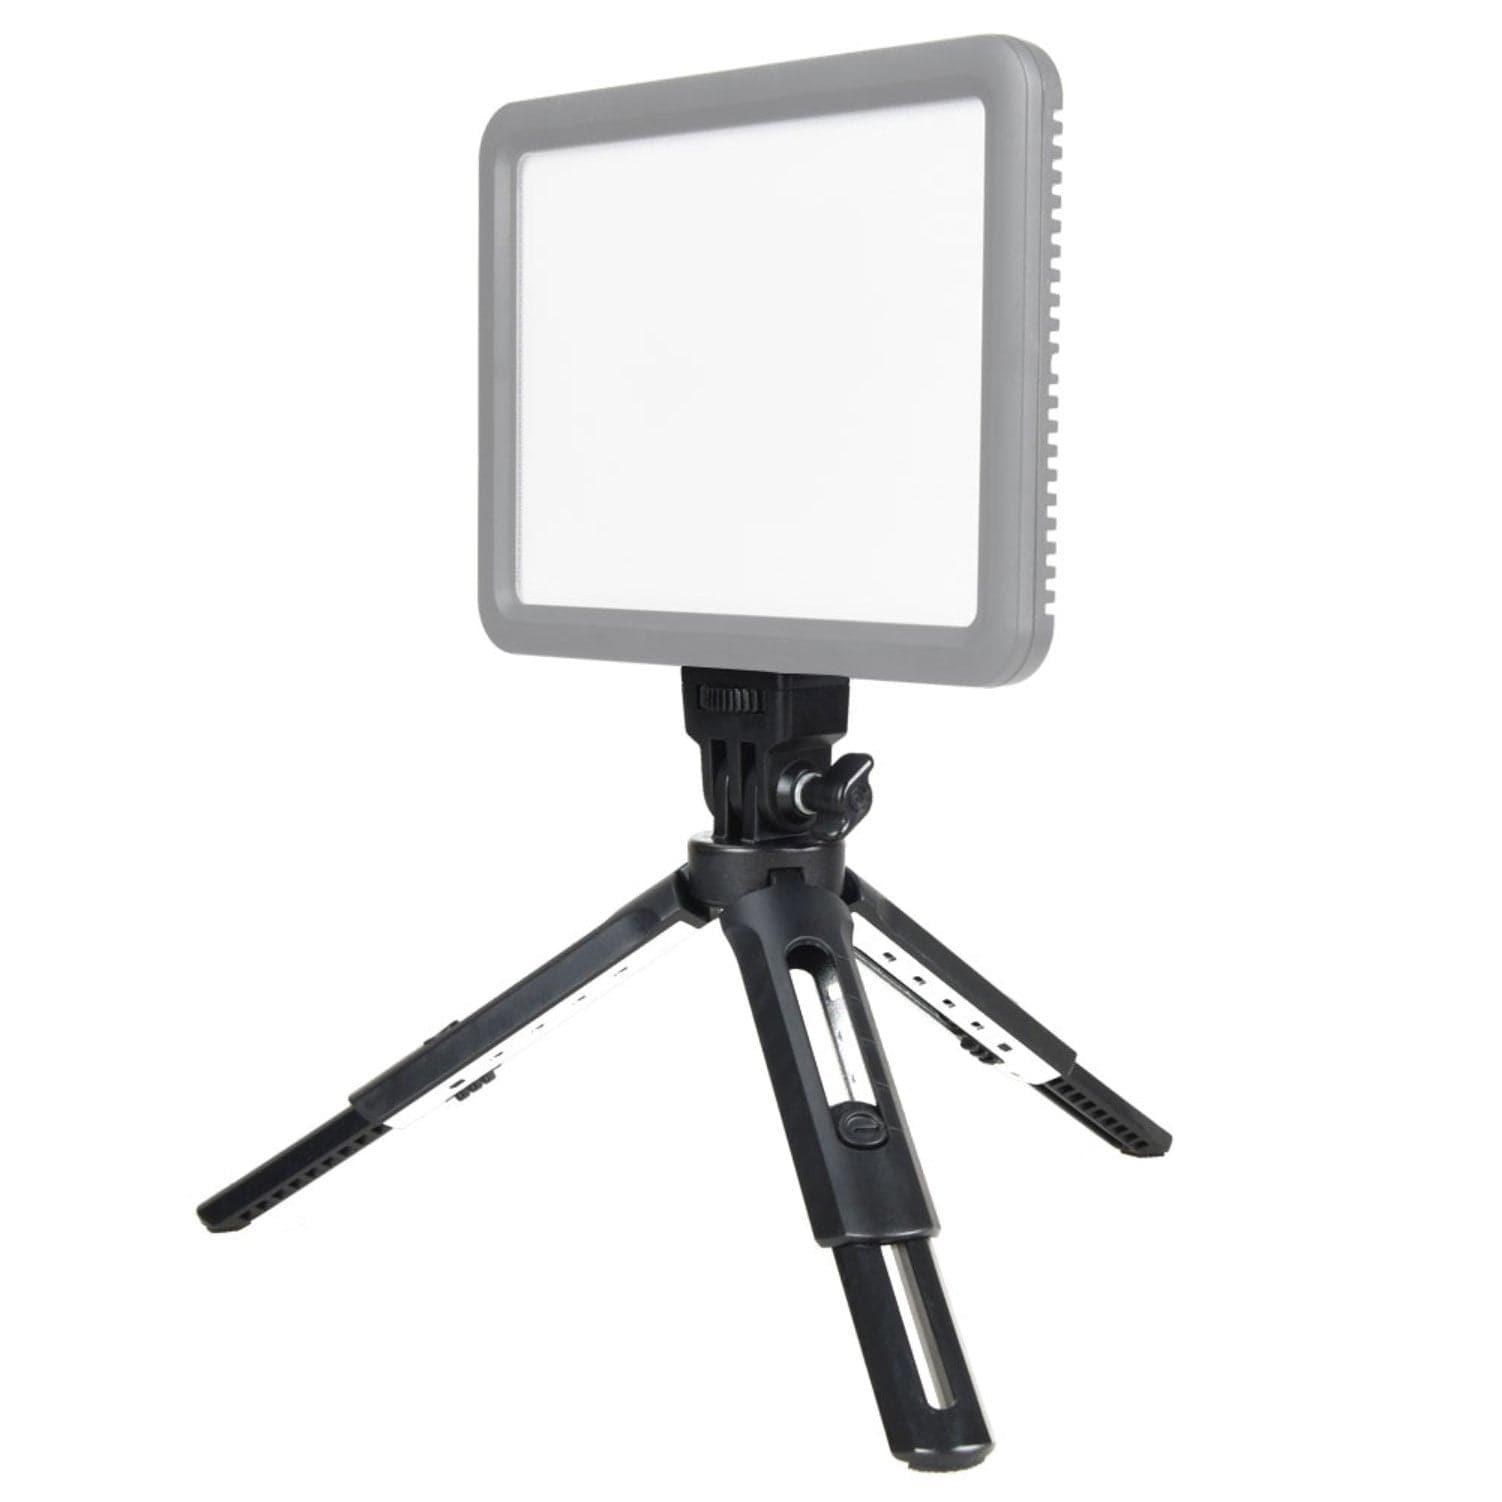 Mini Tabletop Desk Tripod Stand for Flash Lighting and Cameras (DEMO STOCK)